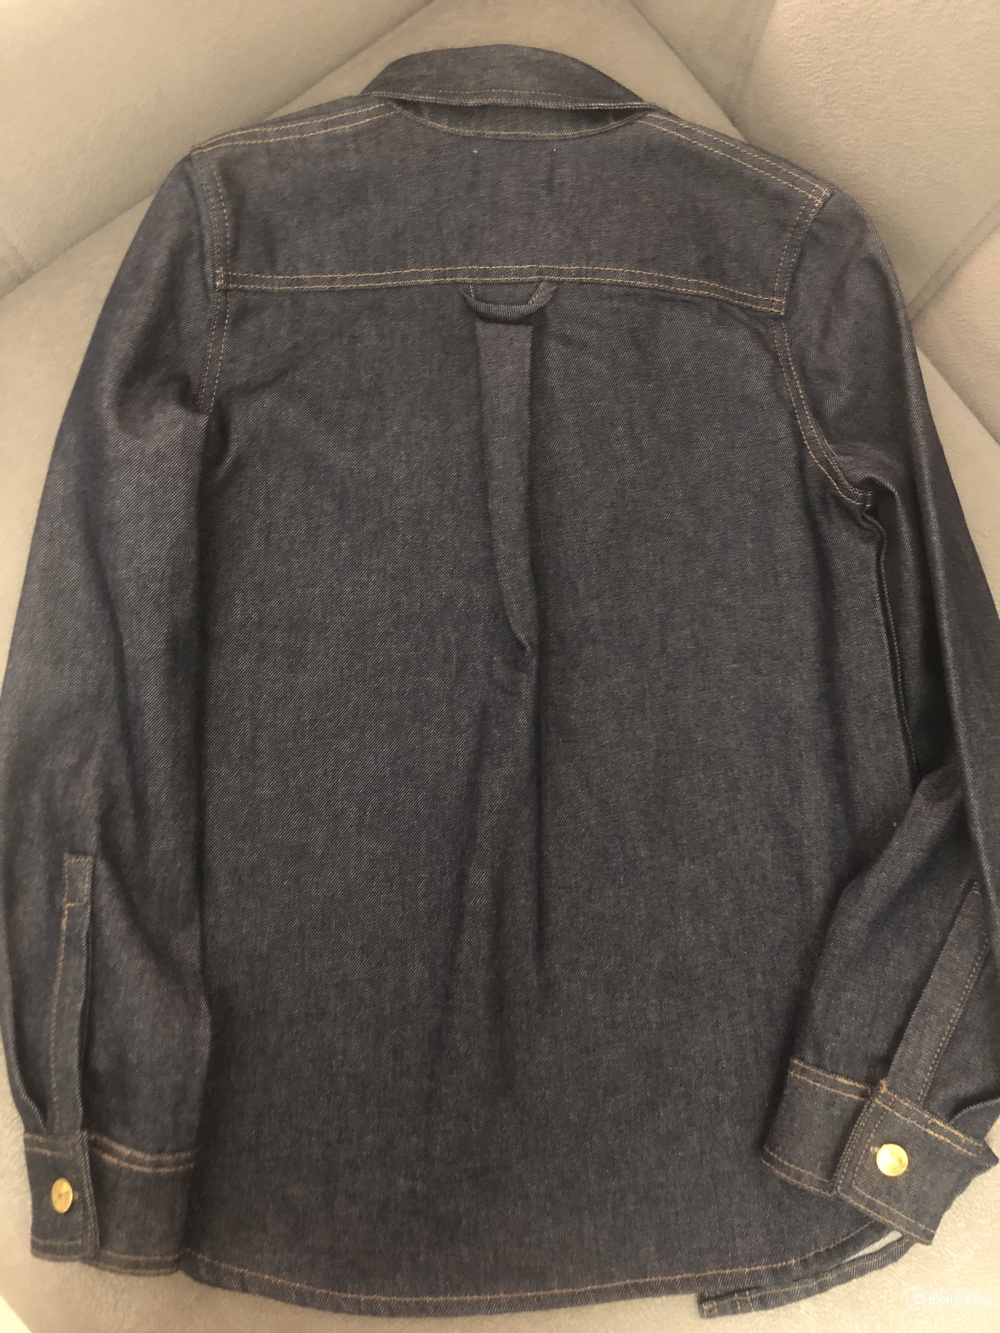 Джинсовая рубашка LIME (XS)